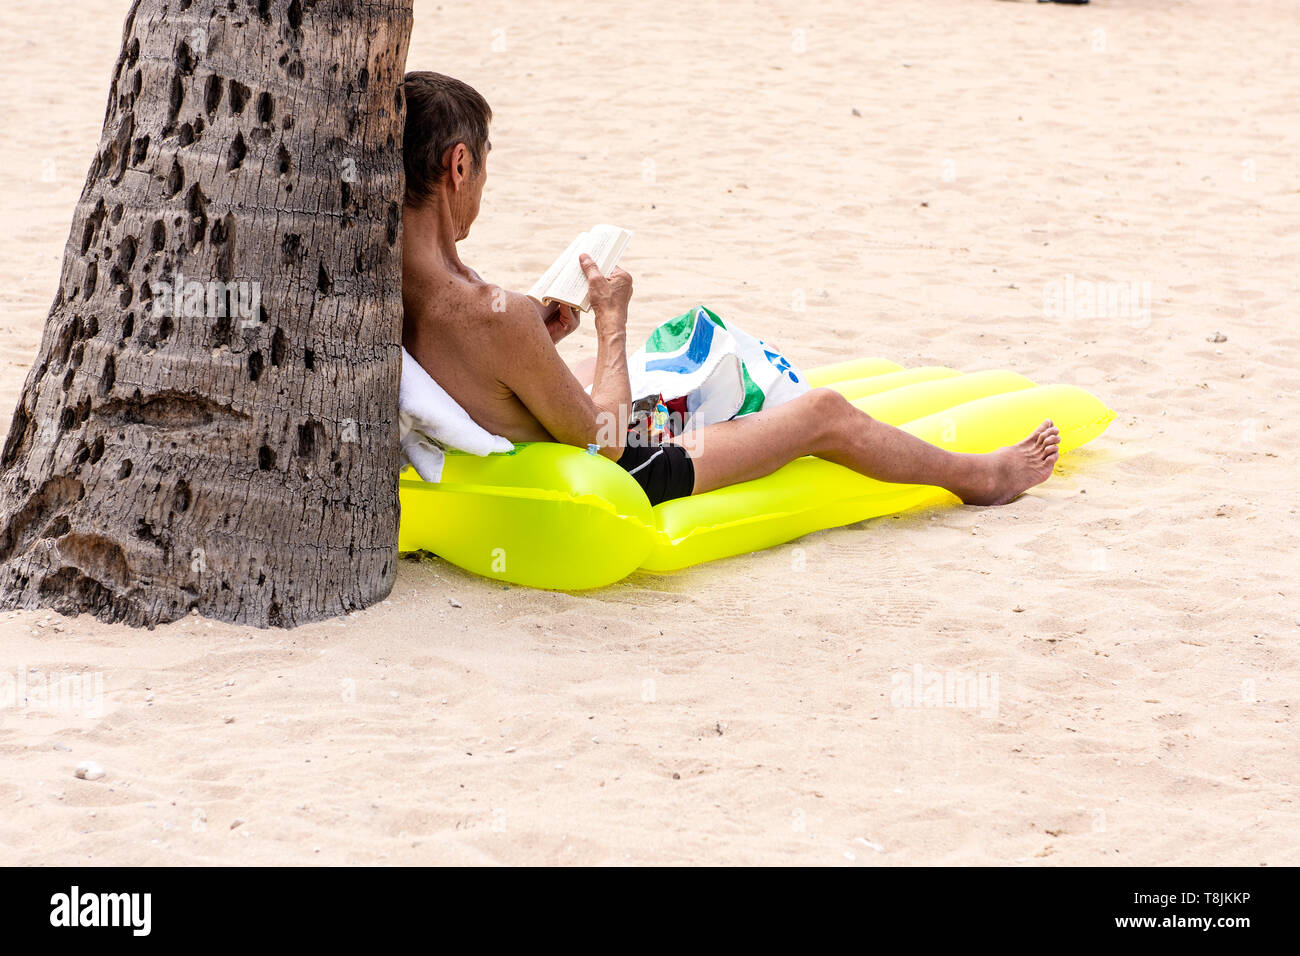 A man sitting off by himself reading a book on a yellow floatation device, Waikiki Beach, Hawaii, USA. Stock Photo